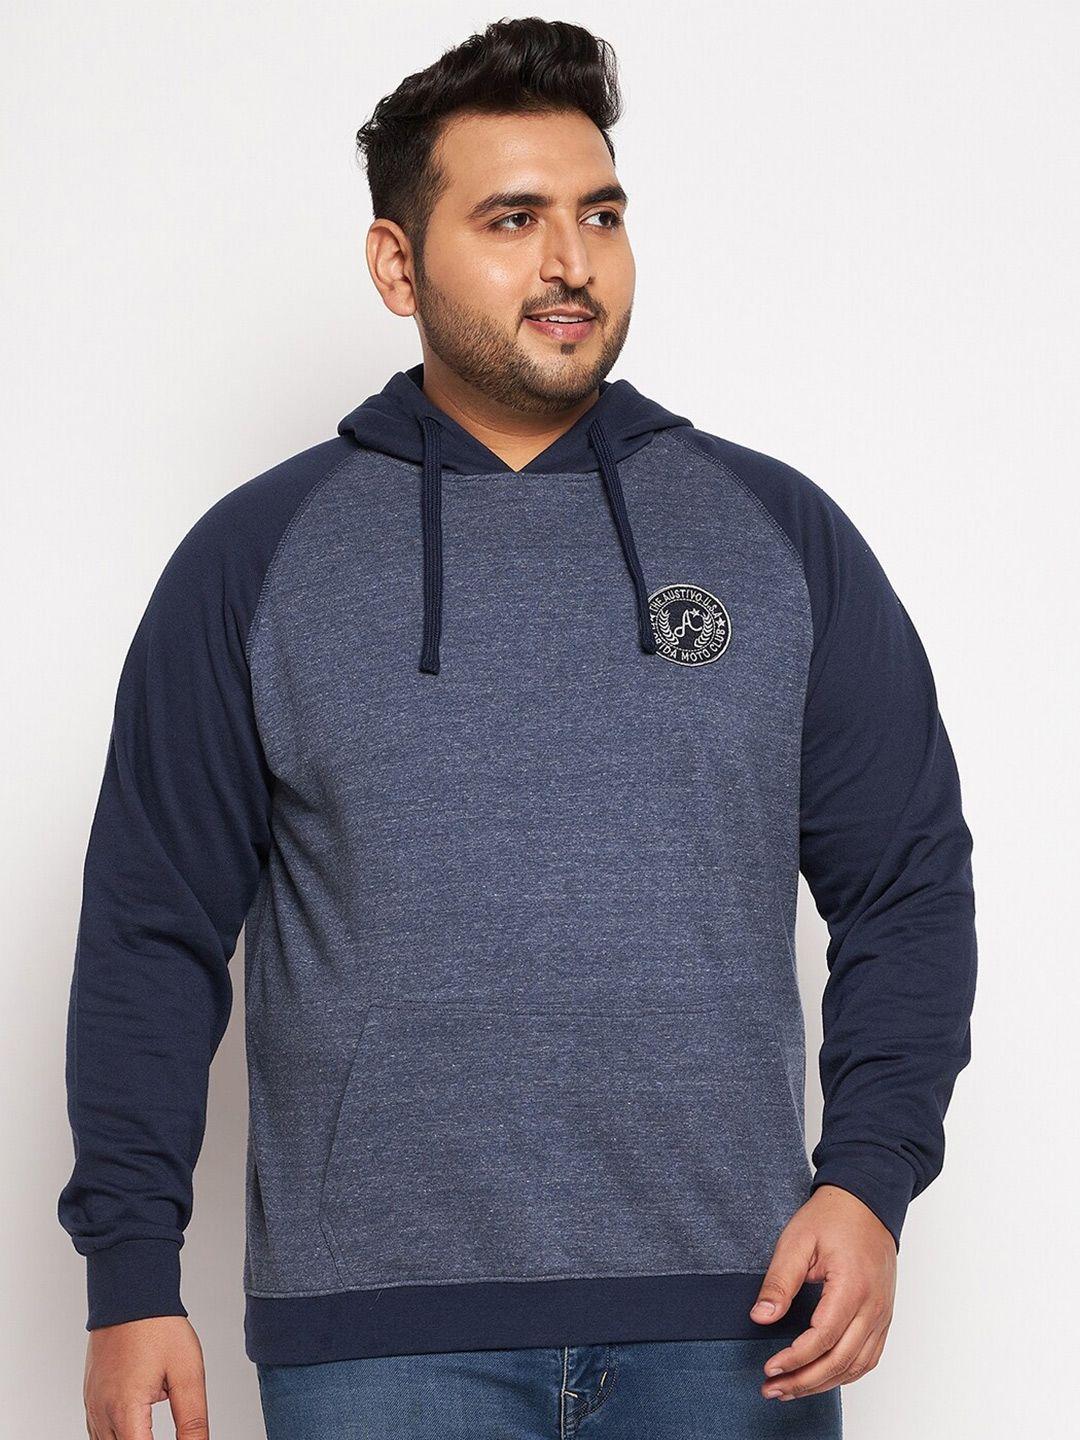 austivo men plus size navy blue colourblocked hooded sweatshirt